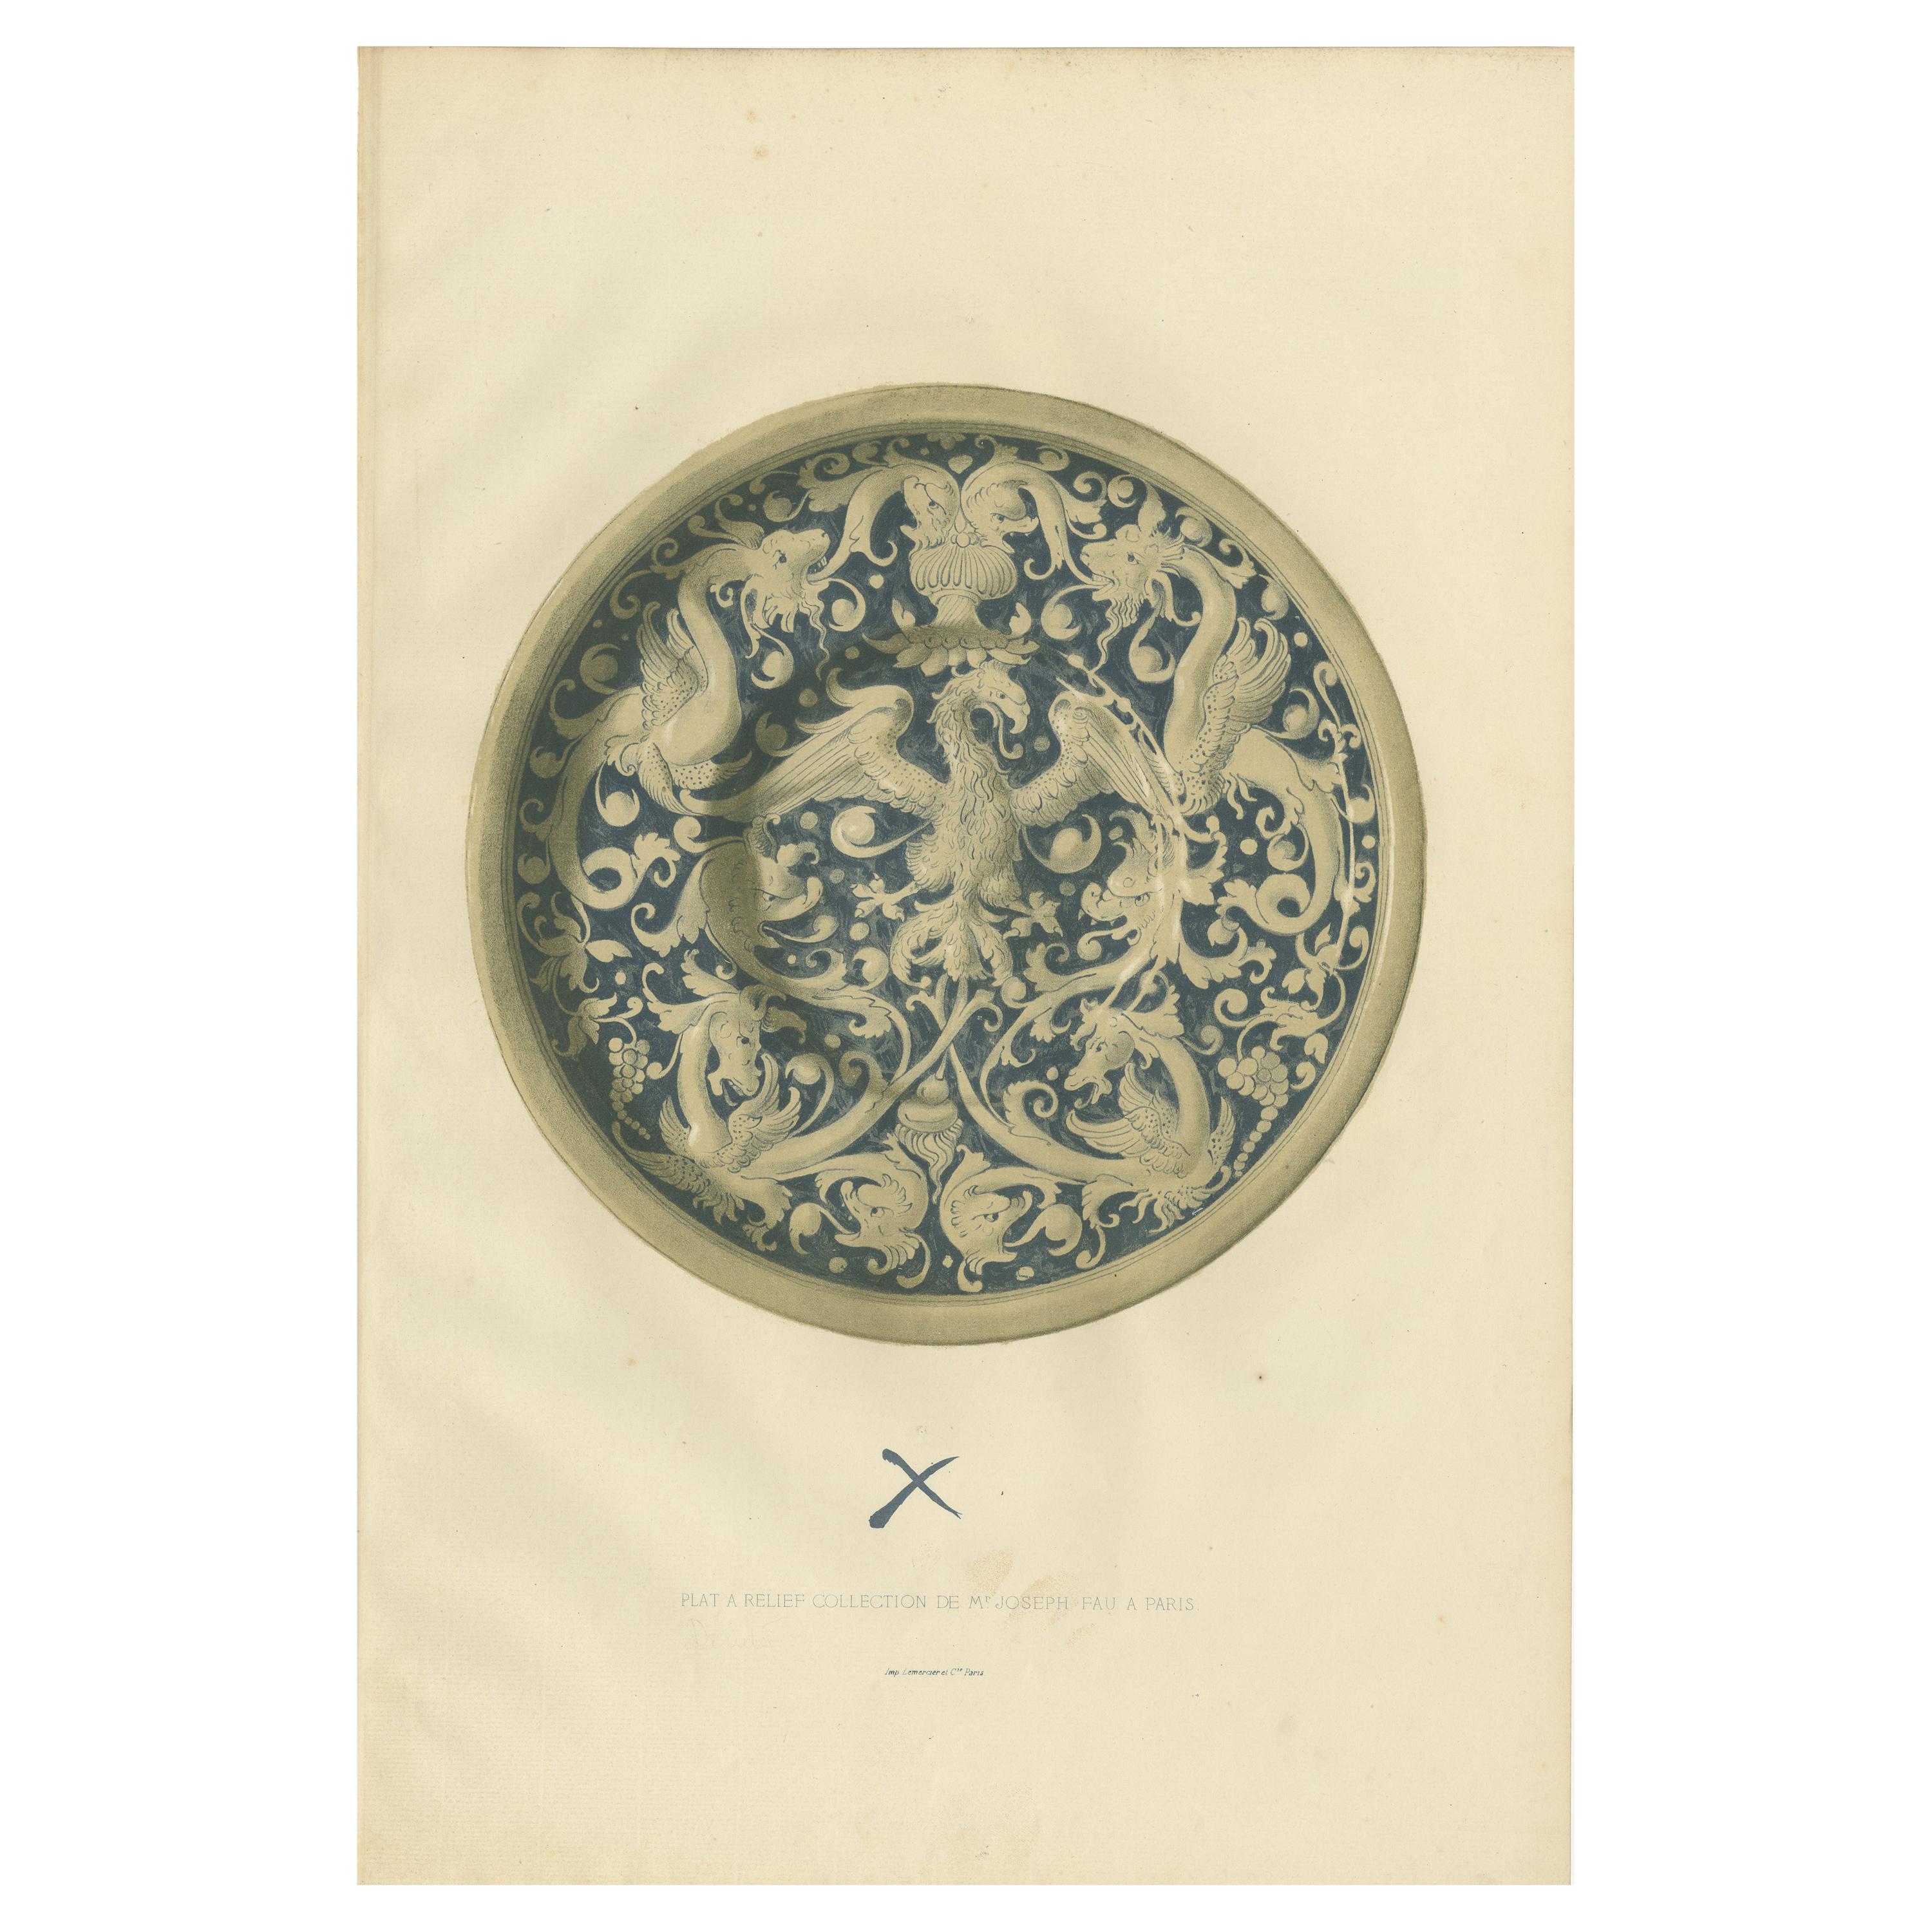 Antique Print of a Plate of Mr. Joseph Fau by Delange '1869'